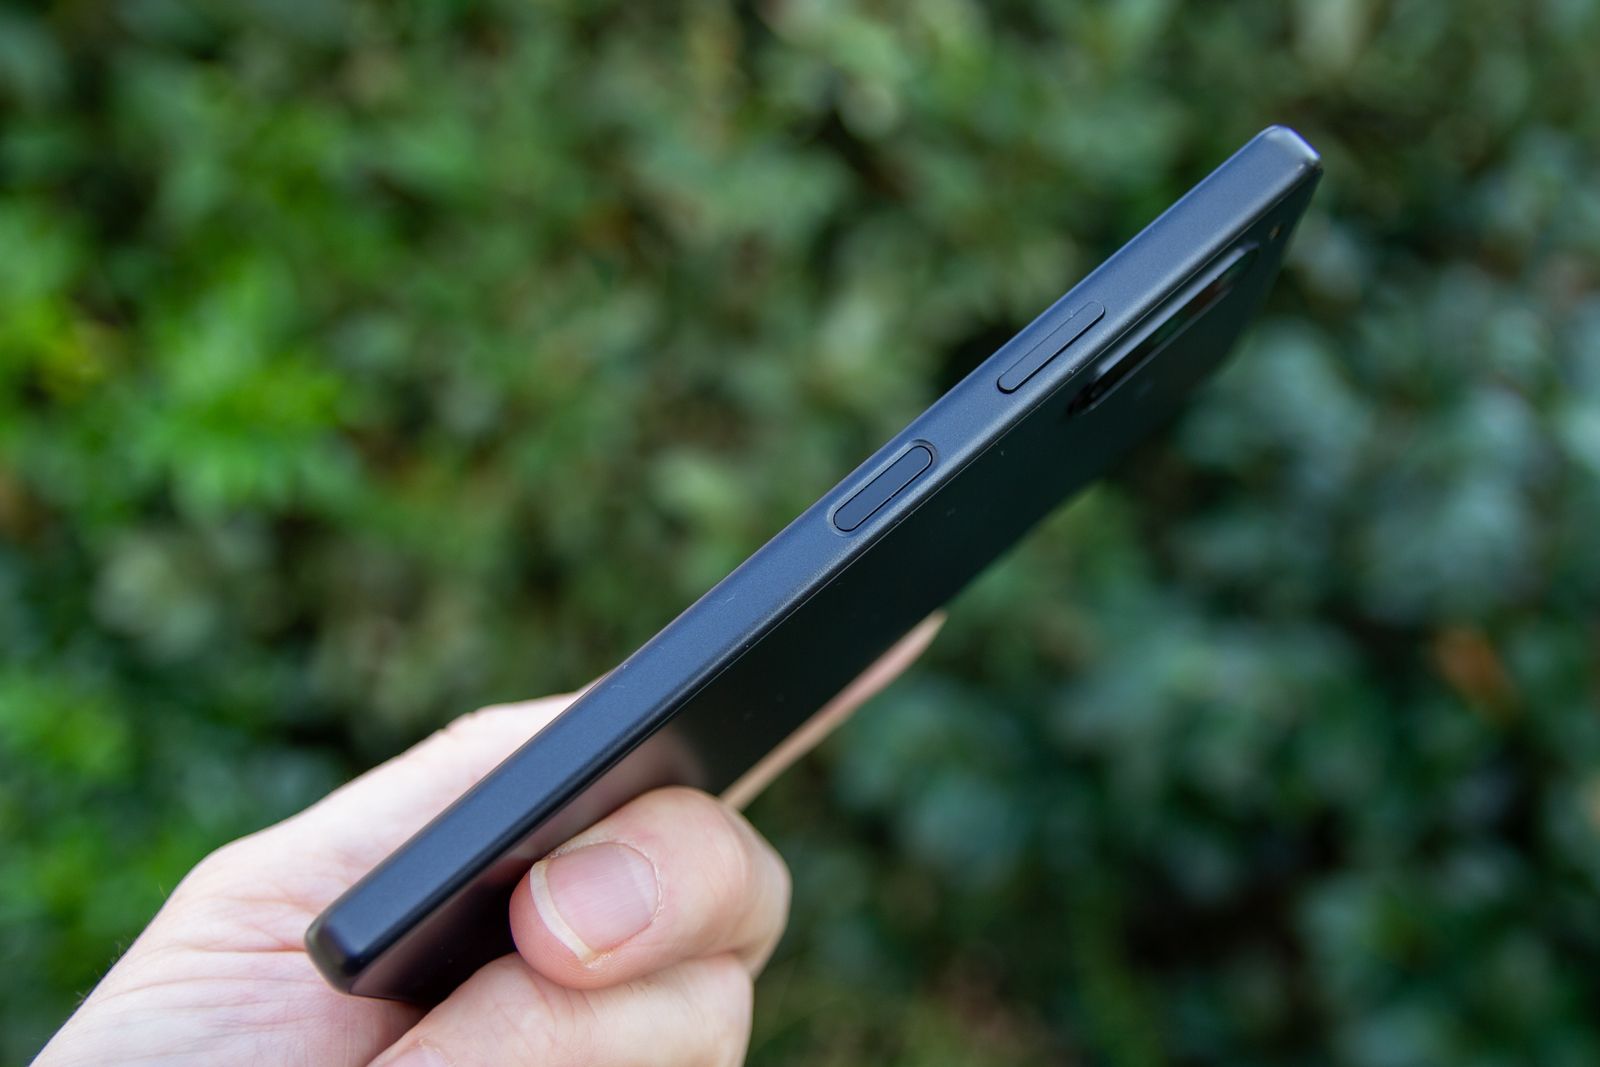 Análisis Sony Xperia 10 V: estilo clásico pero revitalizado